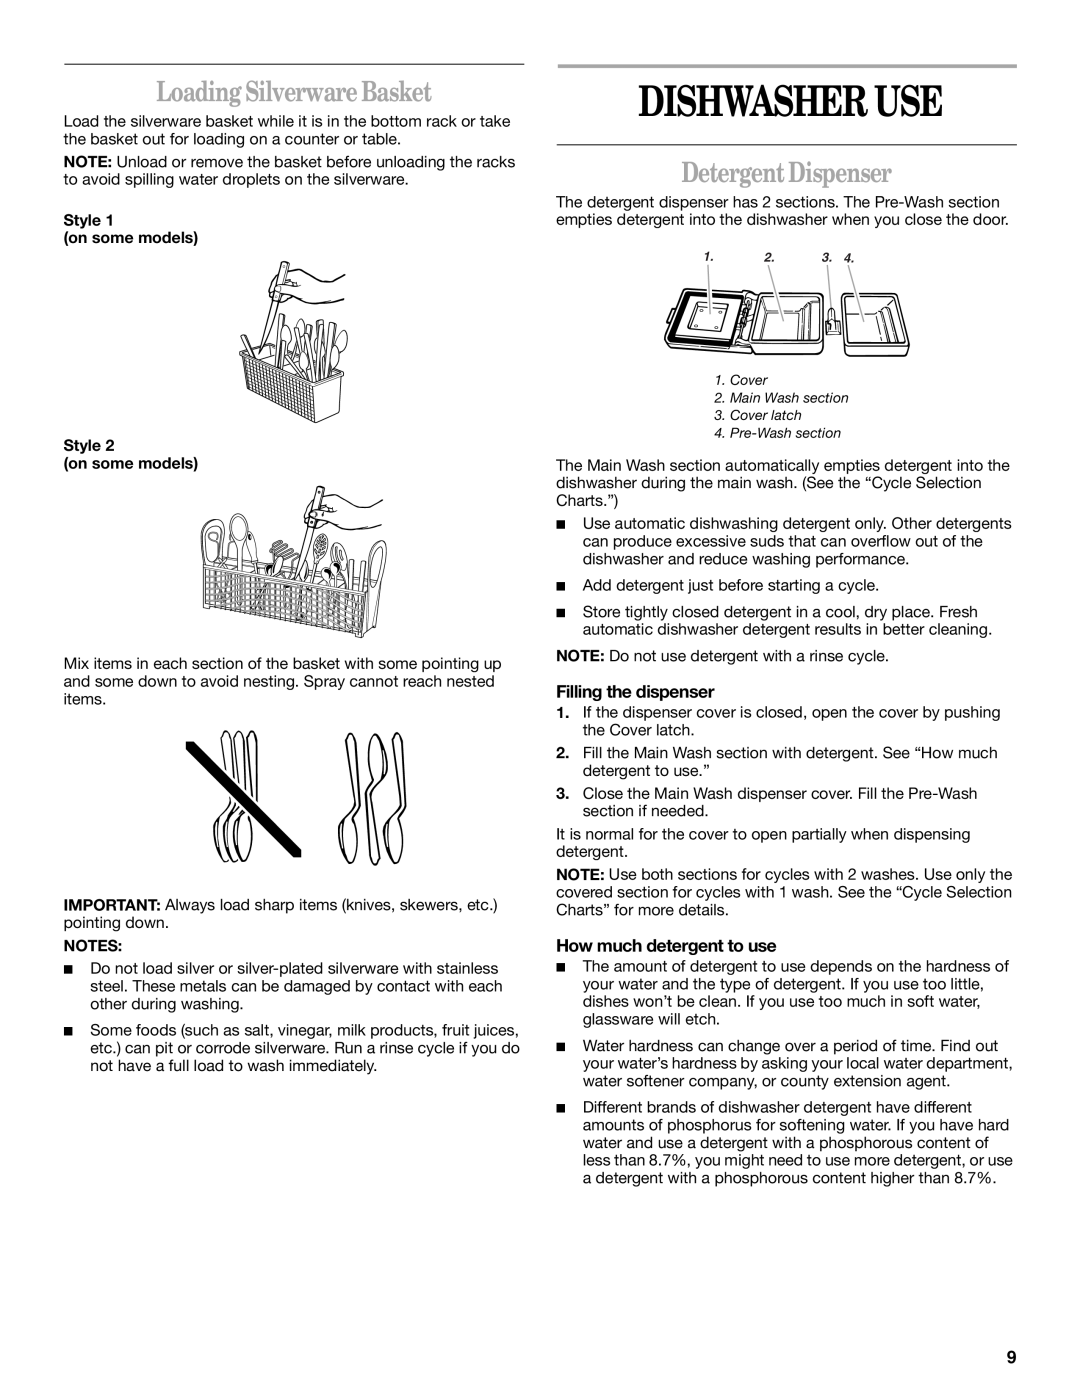 Whirlpool Series 810 manual Dishwasher Use, Loading Silverware Basket, Detergent Dispenser, Filling the dispenser 